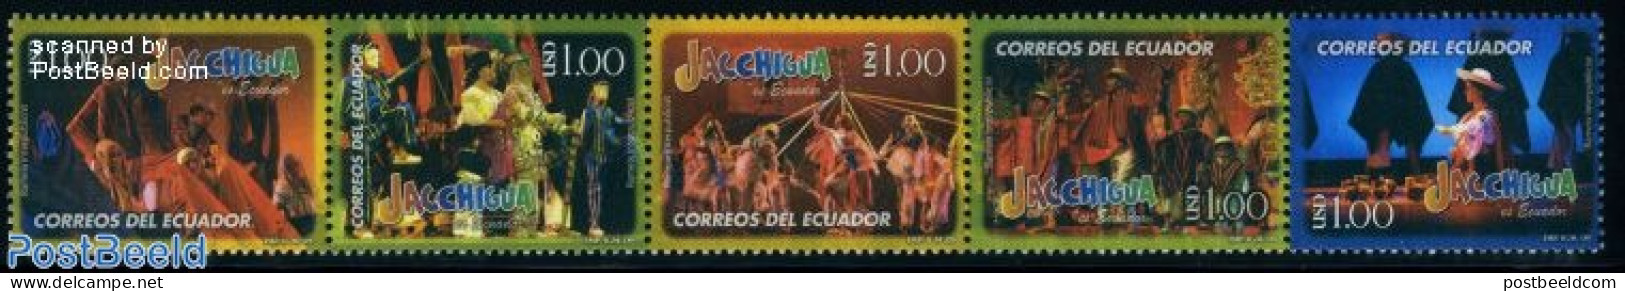 Ecuador 2009 Jacchigua Dance Group 5v [::::], Mint NH, Performance Art - Various - Dance & Ballet - Folklore - Dance